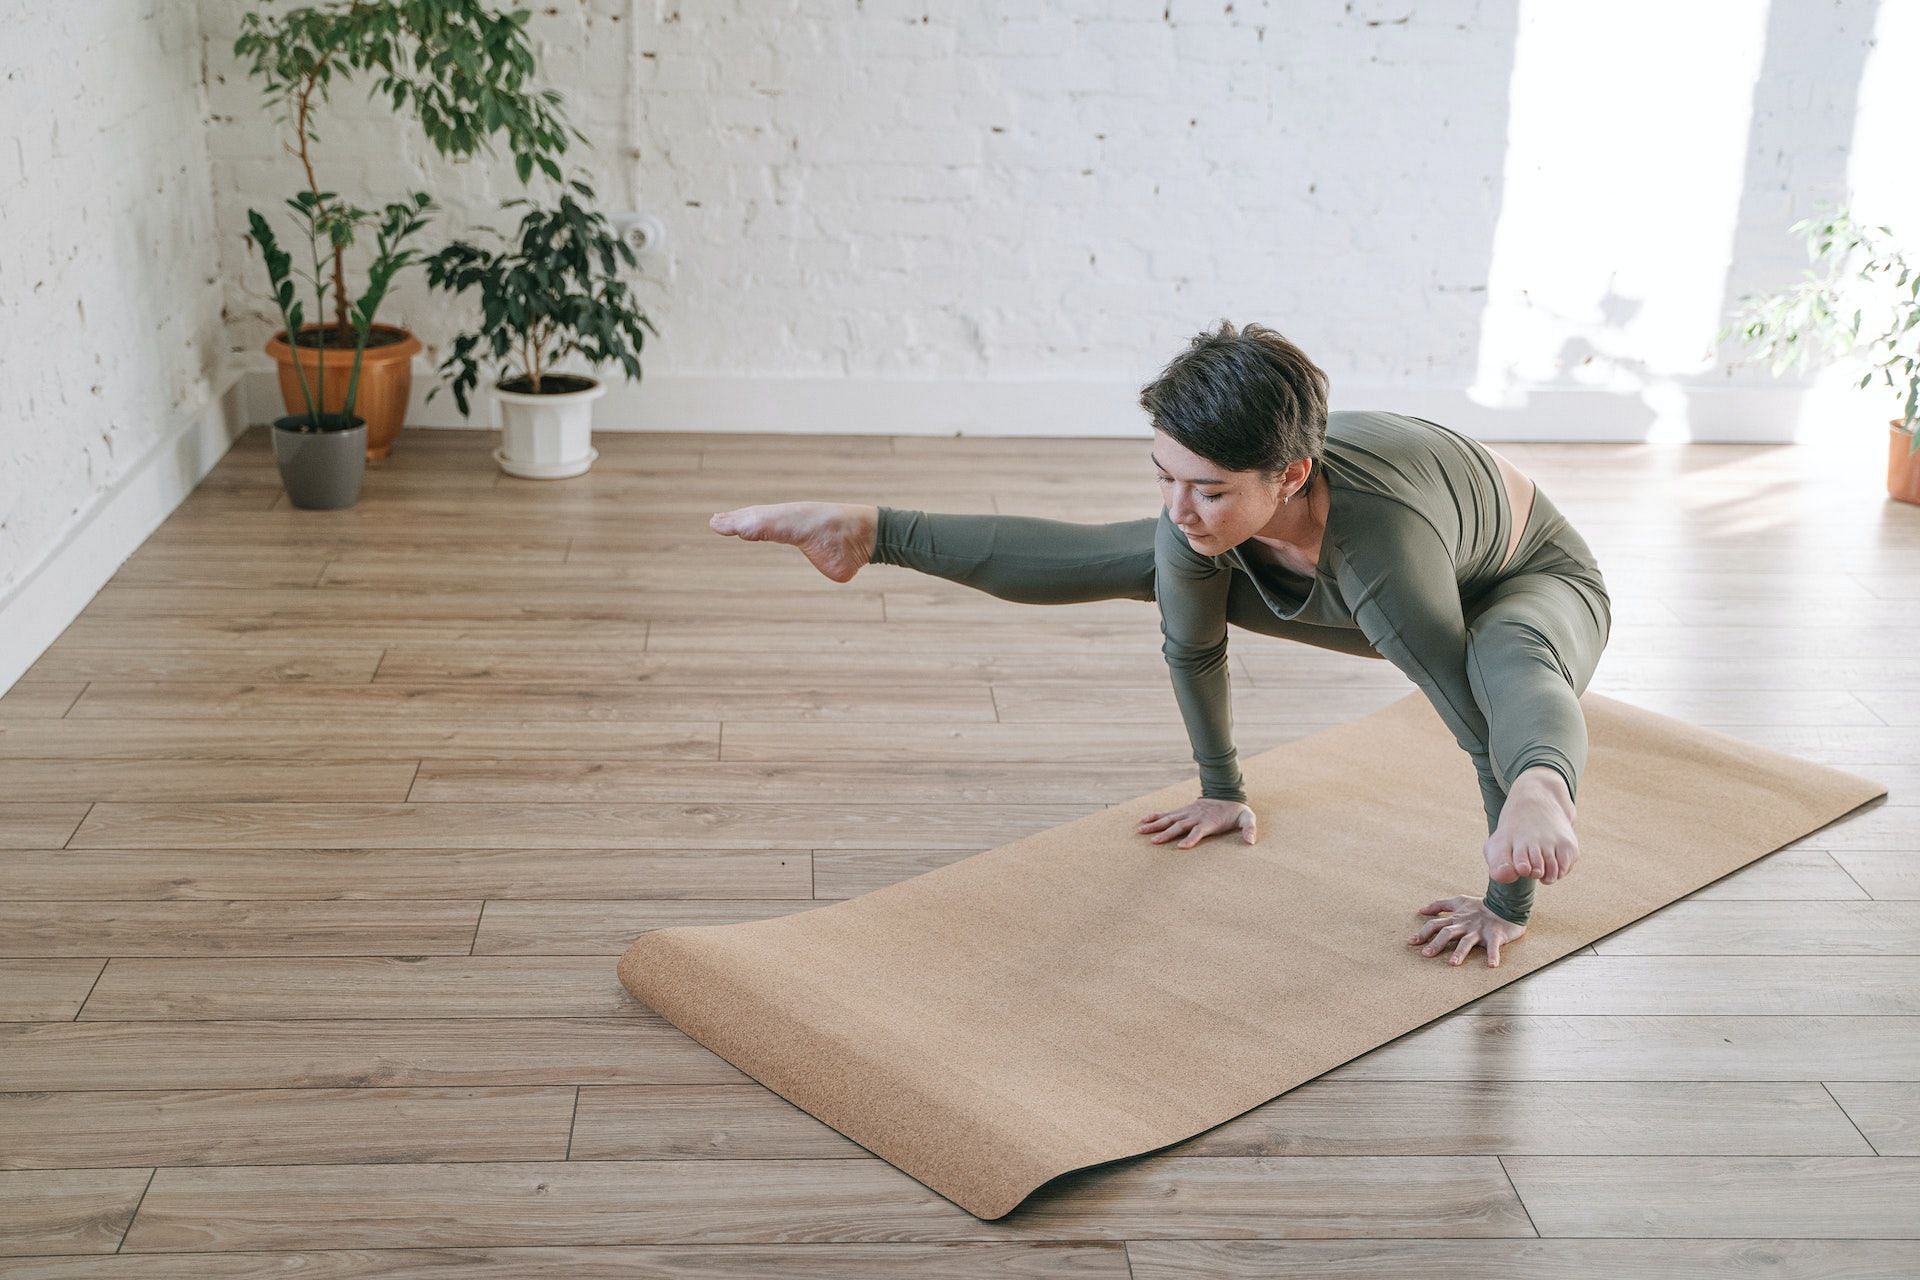 Yoga can help reduce hip tightness and pain. (Photo via Pexels/Ivan Samkov)